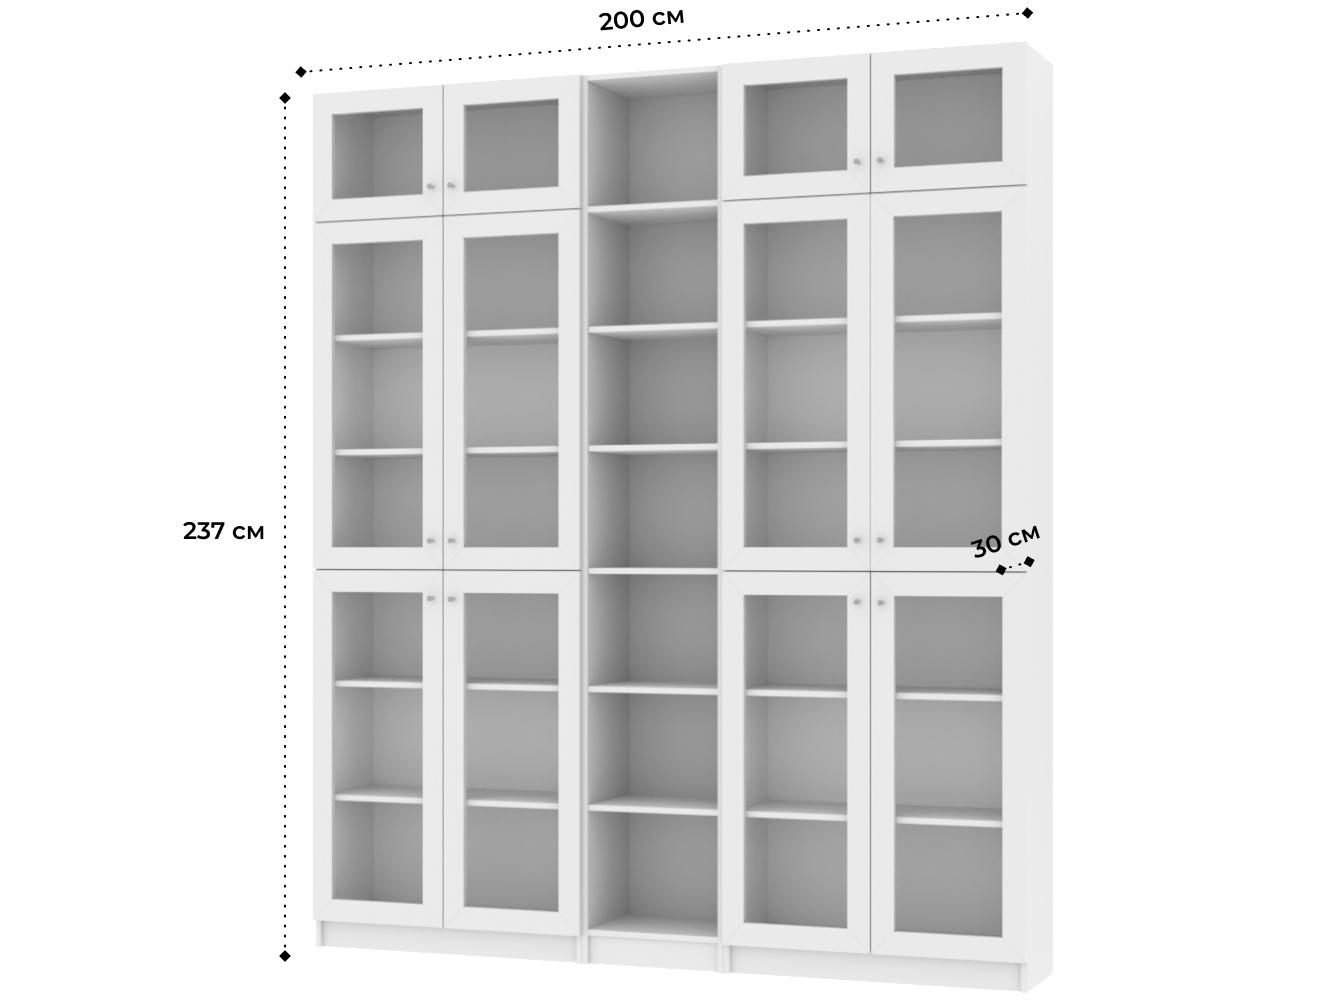  Книжный шкаф Билли 398 white ИКЕА (IKEA) изображение товара